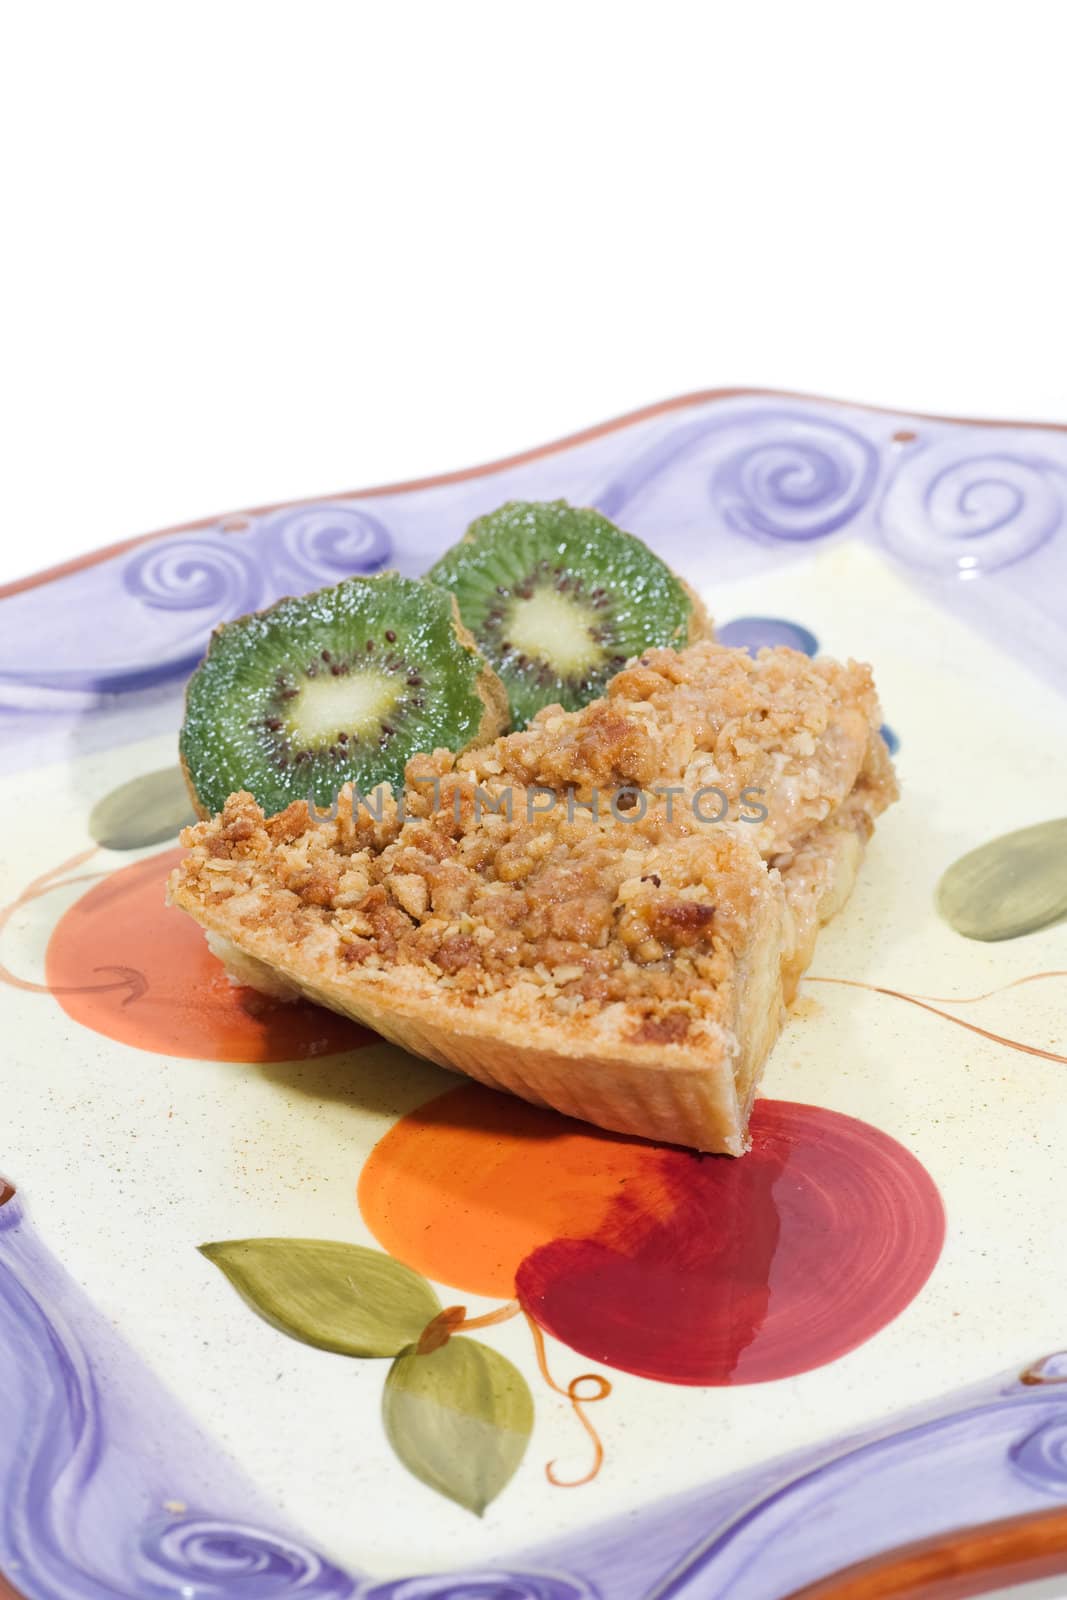 Apple pie slice with kiwi garnish by woodygraphs